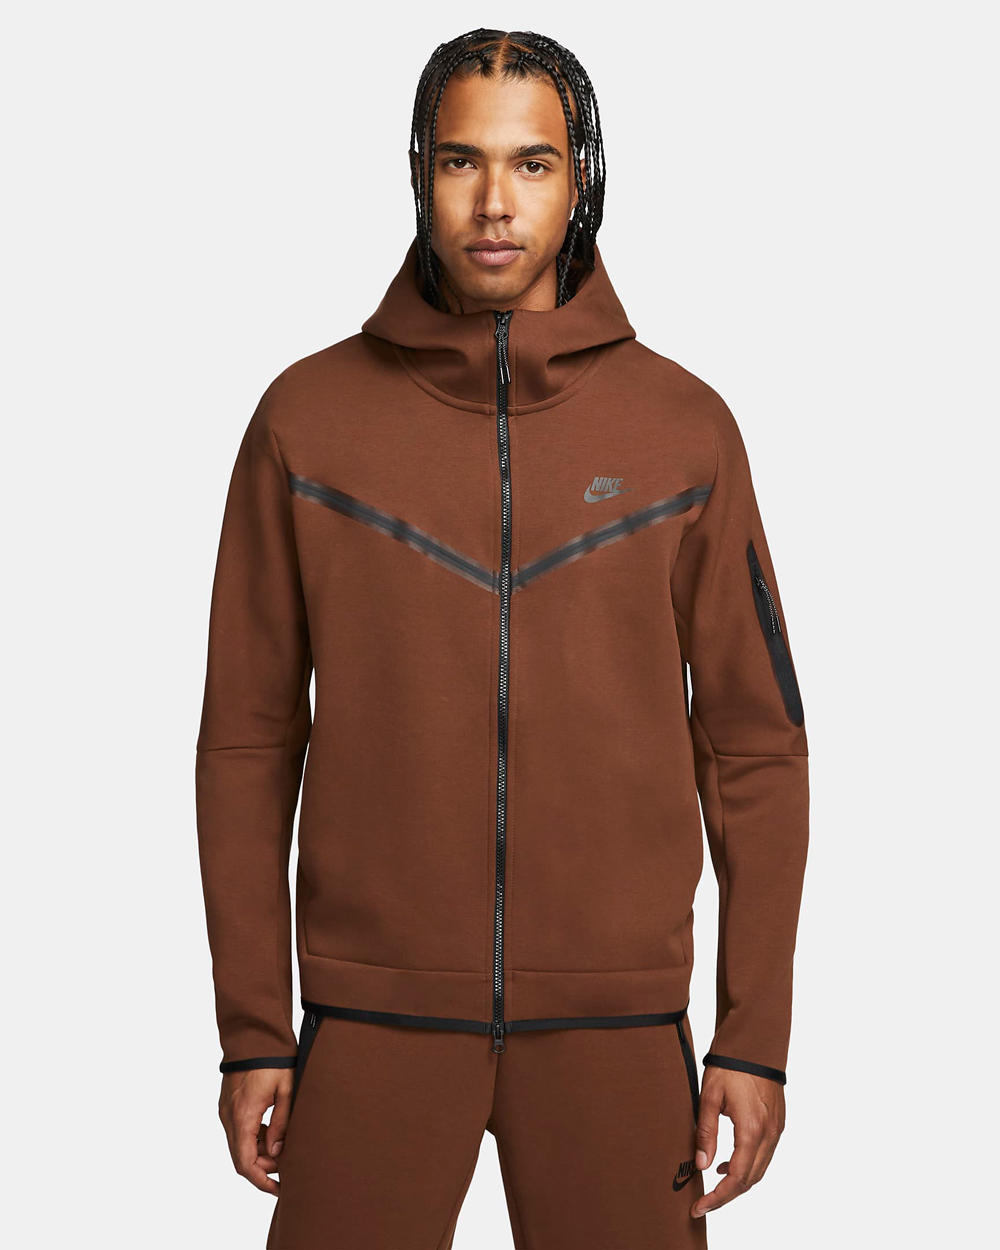 nike-tech-fleece-hoodie-brown-cocao-wow